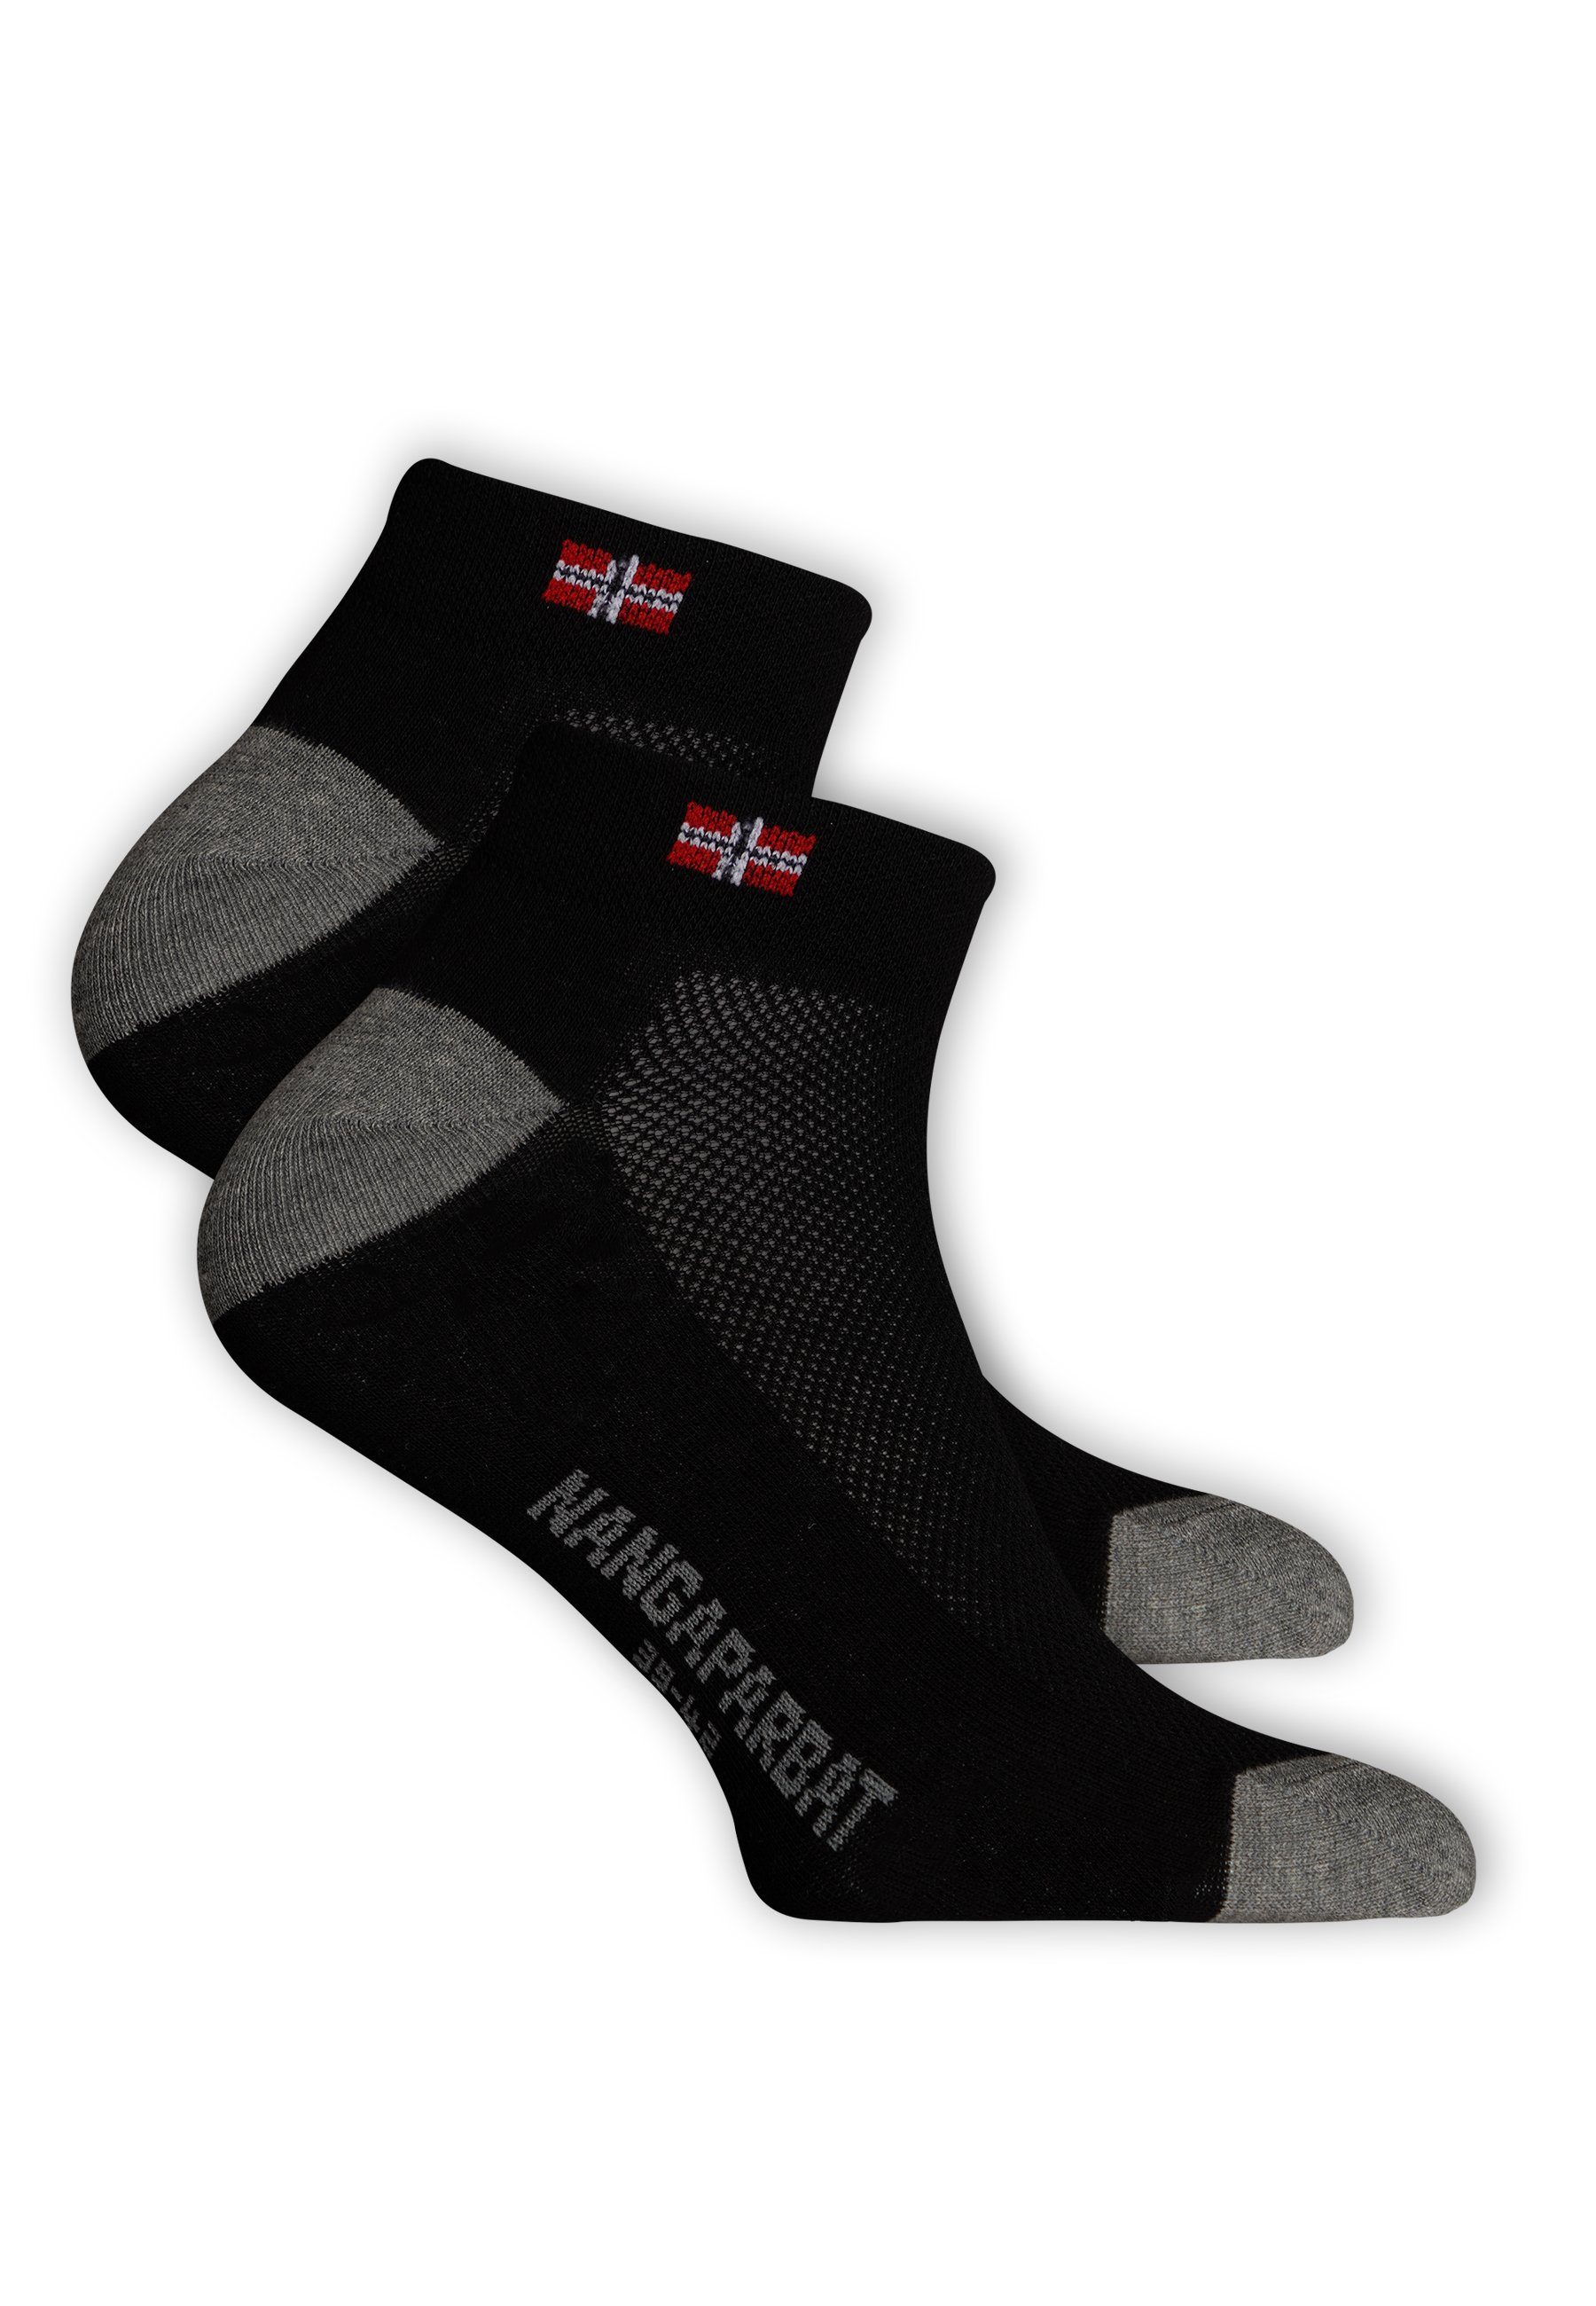 NANGAPARBAT Socken schwarz Trittdämpfung mit komfortabler